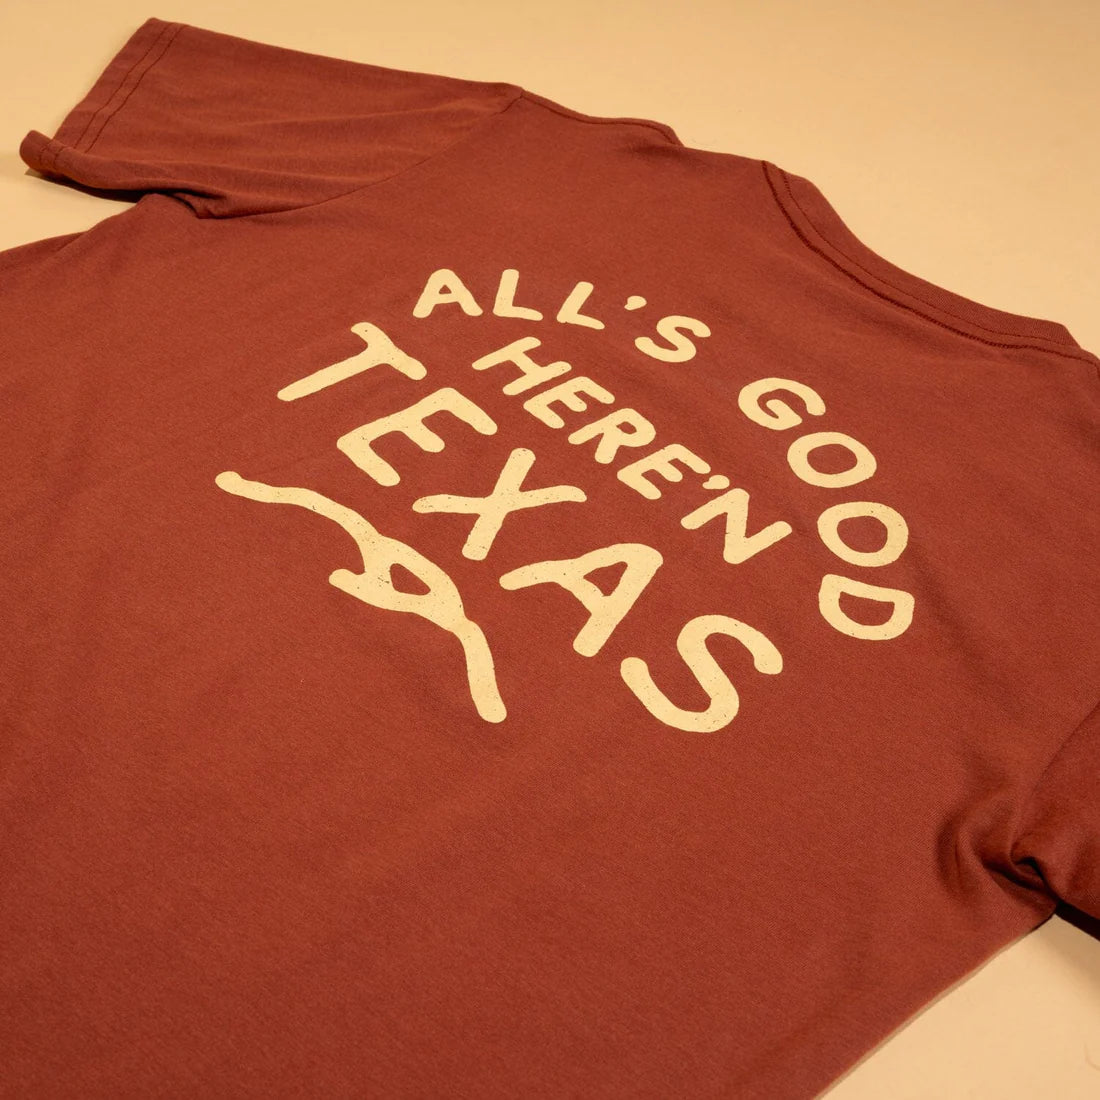 All's Good Here'n Texas